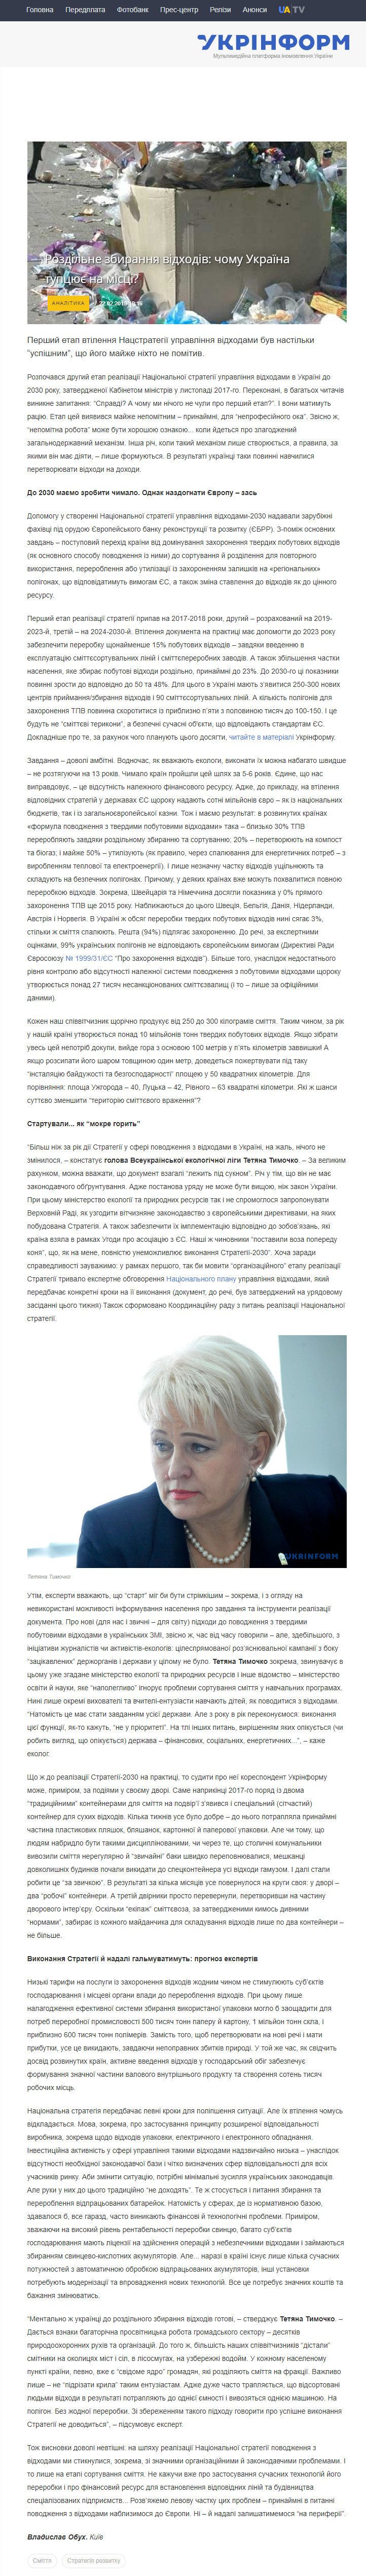 https://www.ukrinform.ua/rubric-society/2646409-rozdilne-zbiranna-vidhodiv-comu-ukraina-tupcue-na-misci.html